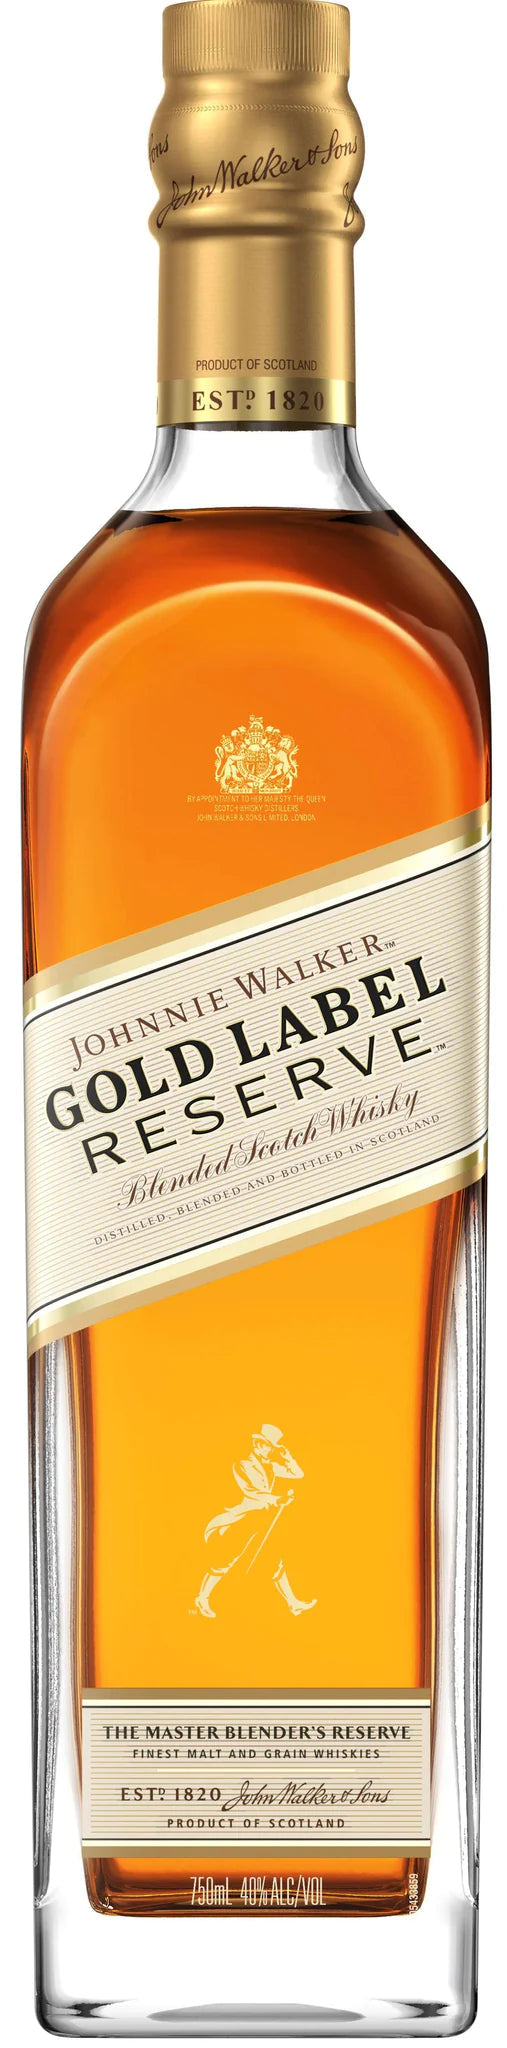 Johnnie Walker Gold Label Reserve .webp__PID:f100df31-4b3f-4cf0-8a83-4e61057acecf